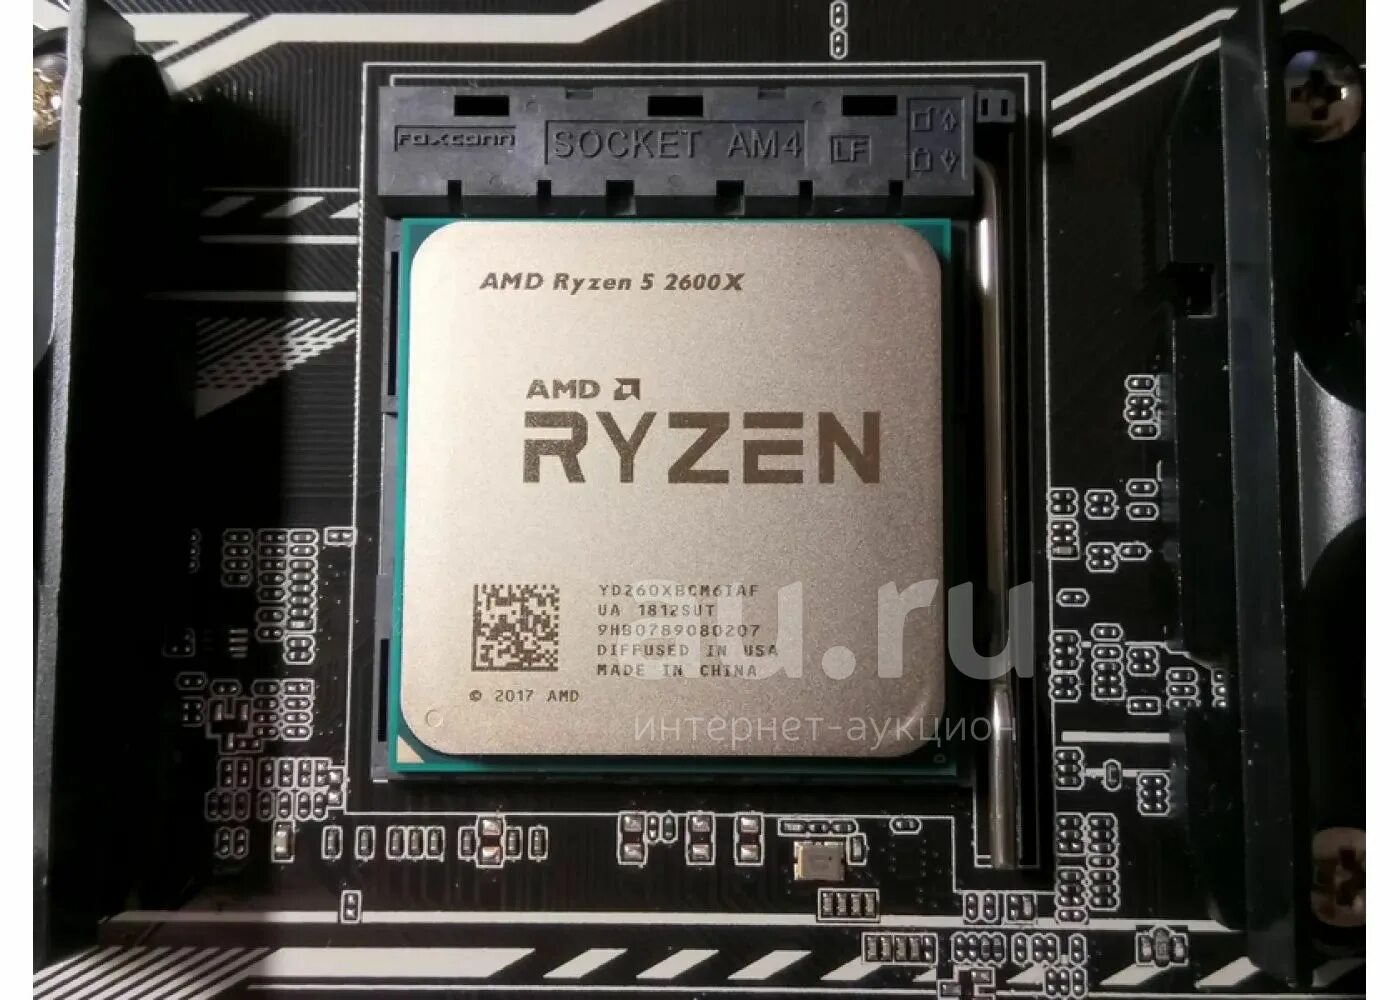 Ryzen 2600 память. AMD Ryzen 5 2600x (Box). AMD 5 2600. Процессор AMD Ryzen 5 2600, socketam4, Box. Ryzen 7 2600.